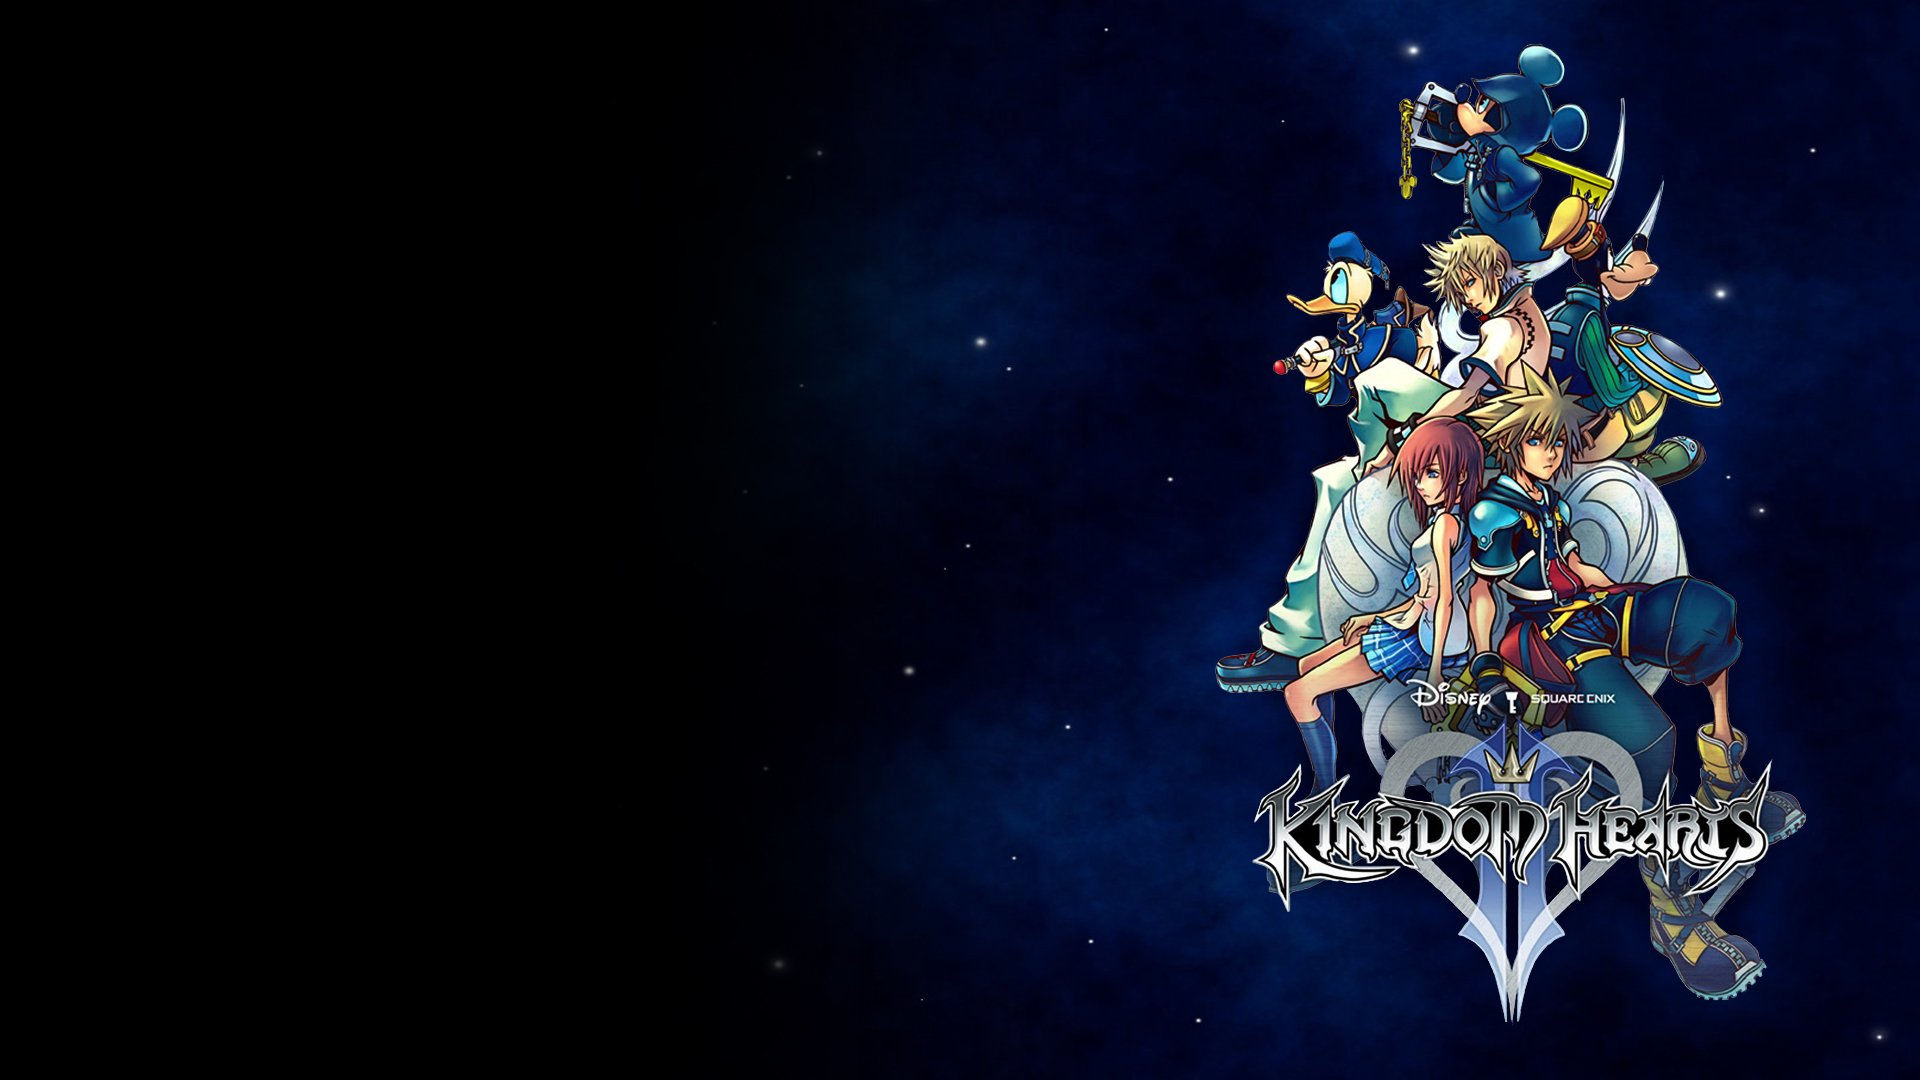 Kingdom Hearts 2 logo and characters